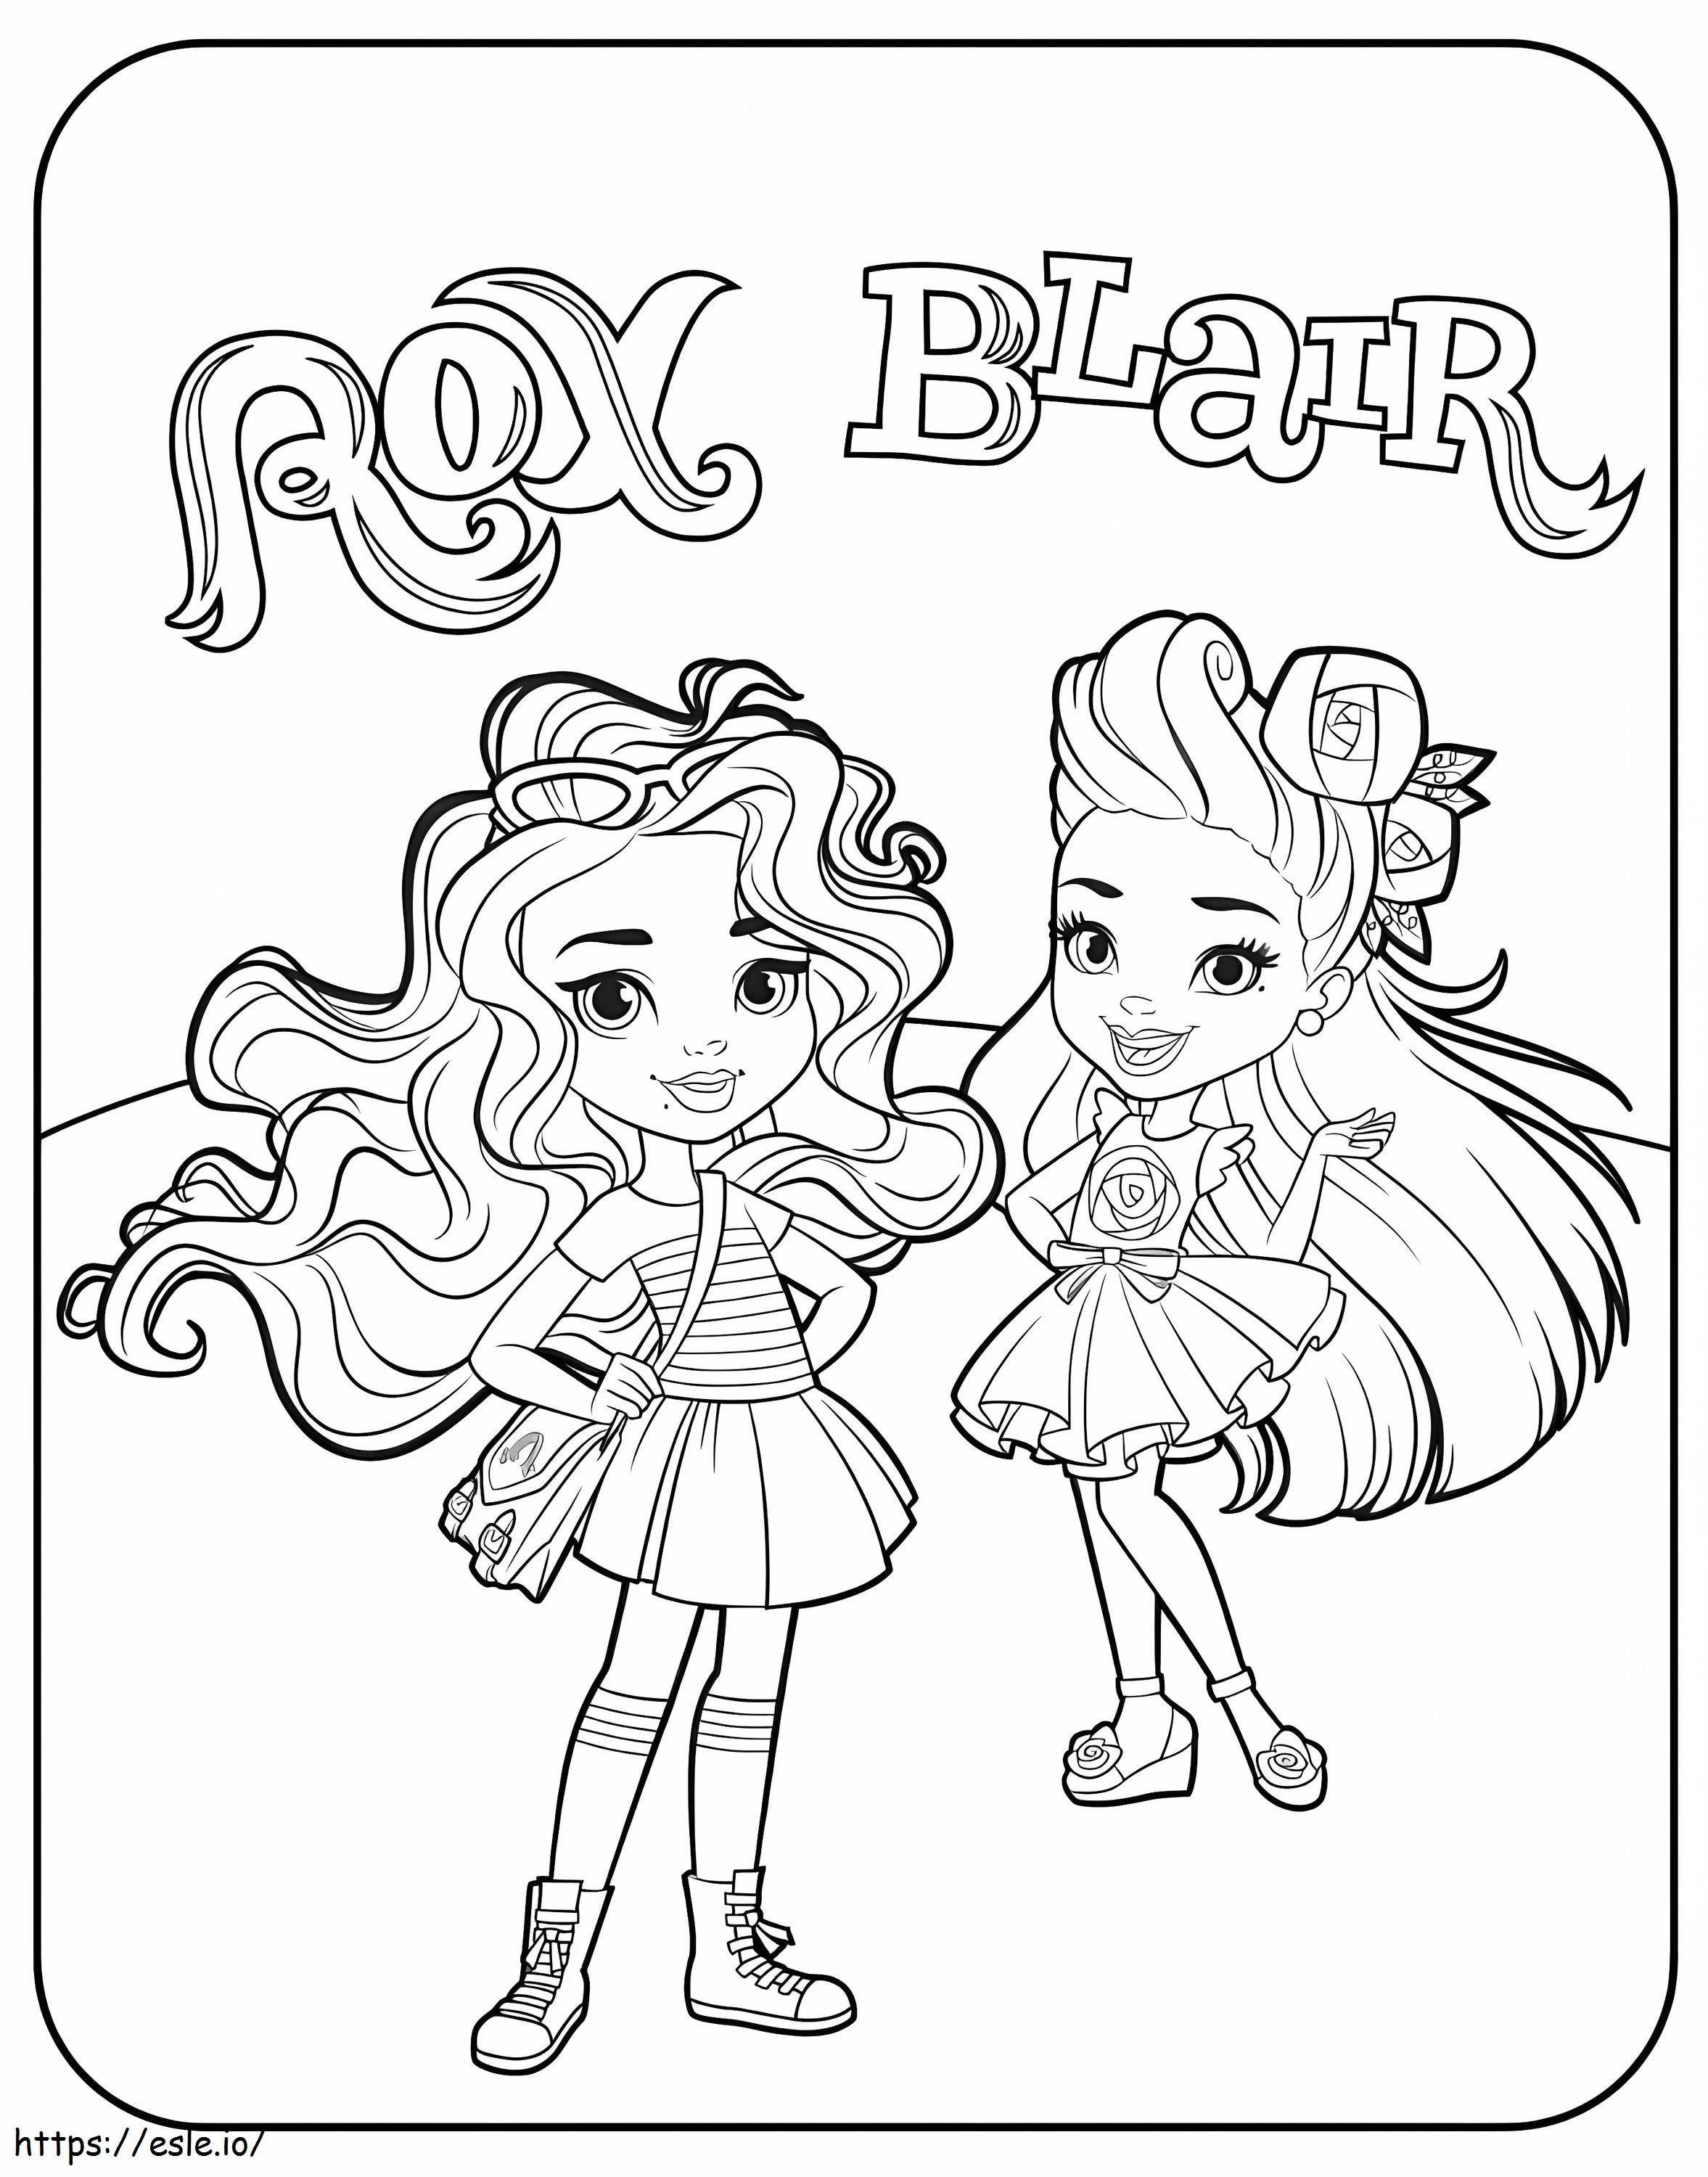 Dia ensolarado de Rox e Blair para colorir